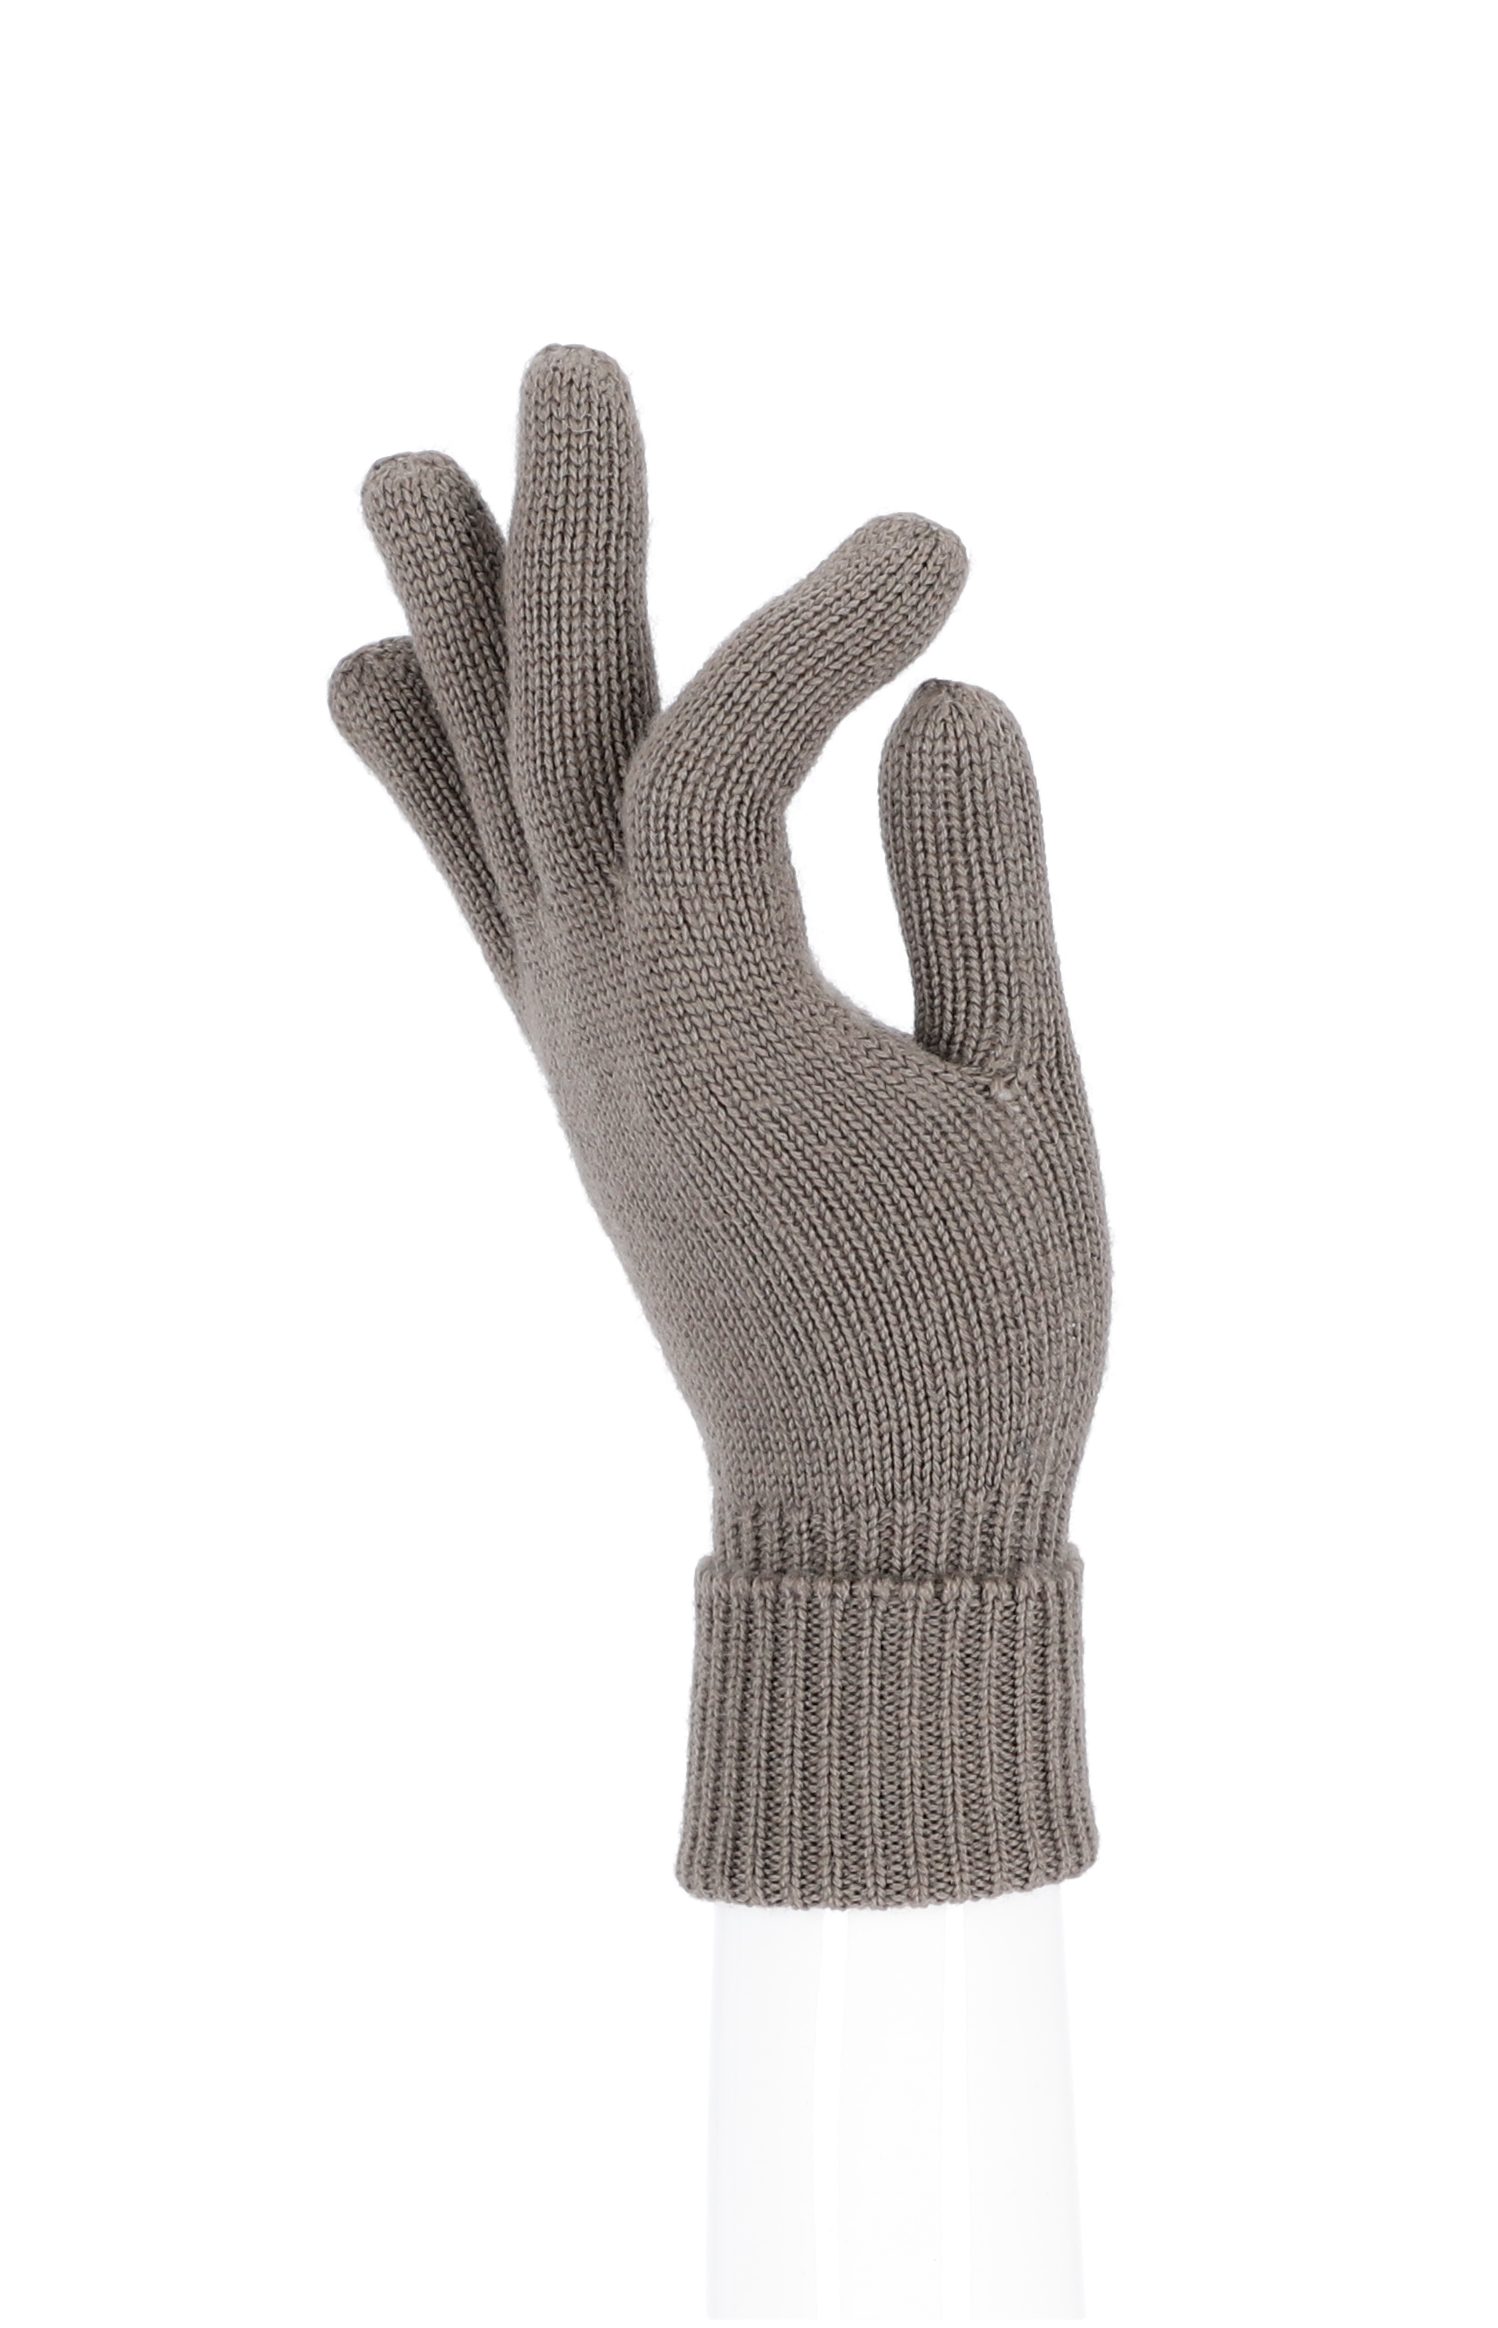 Handschuhe Fingerhandschuh braun Accessoires weiche Damen Damen halsüberkopf Strickhandschuhe